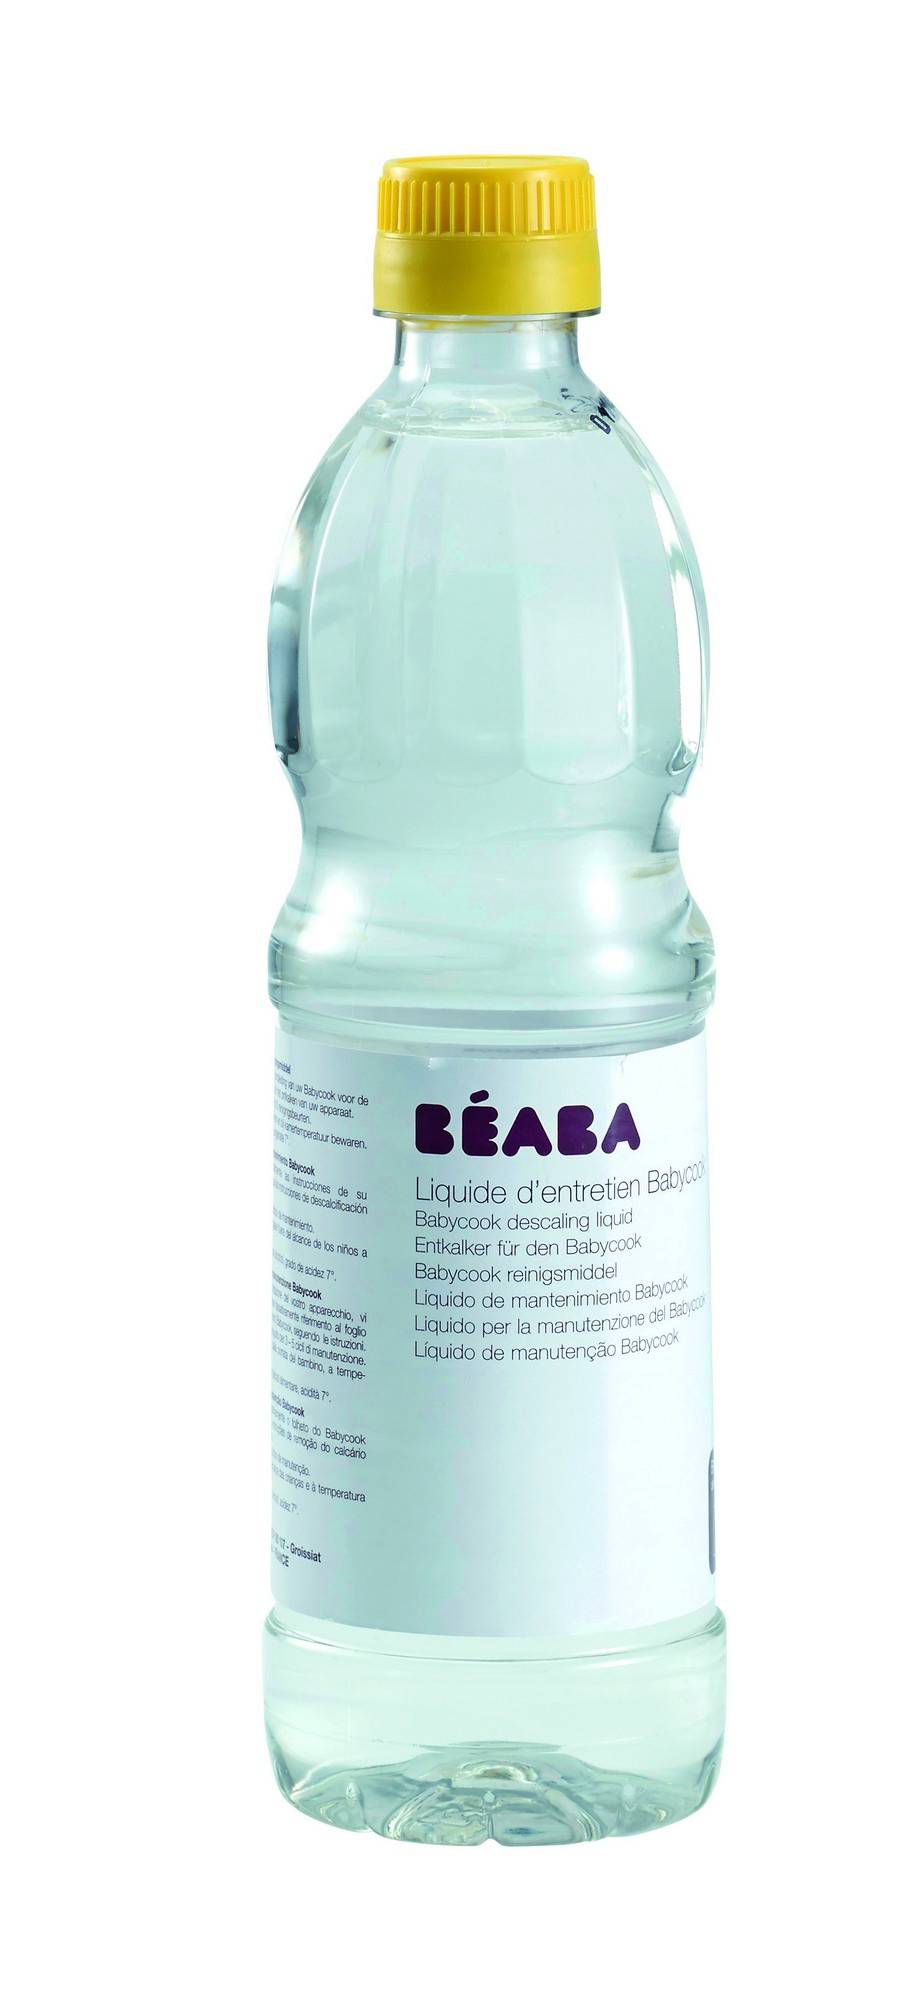 Beaba - Bib'Expresso Water Warmer, Cloud